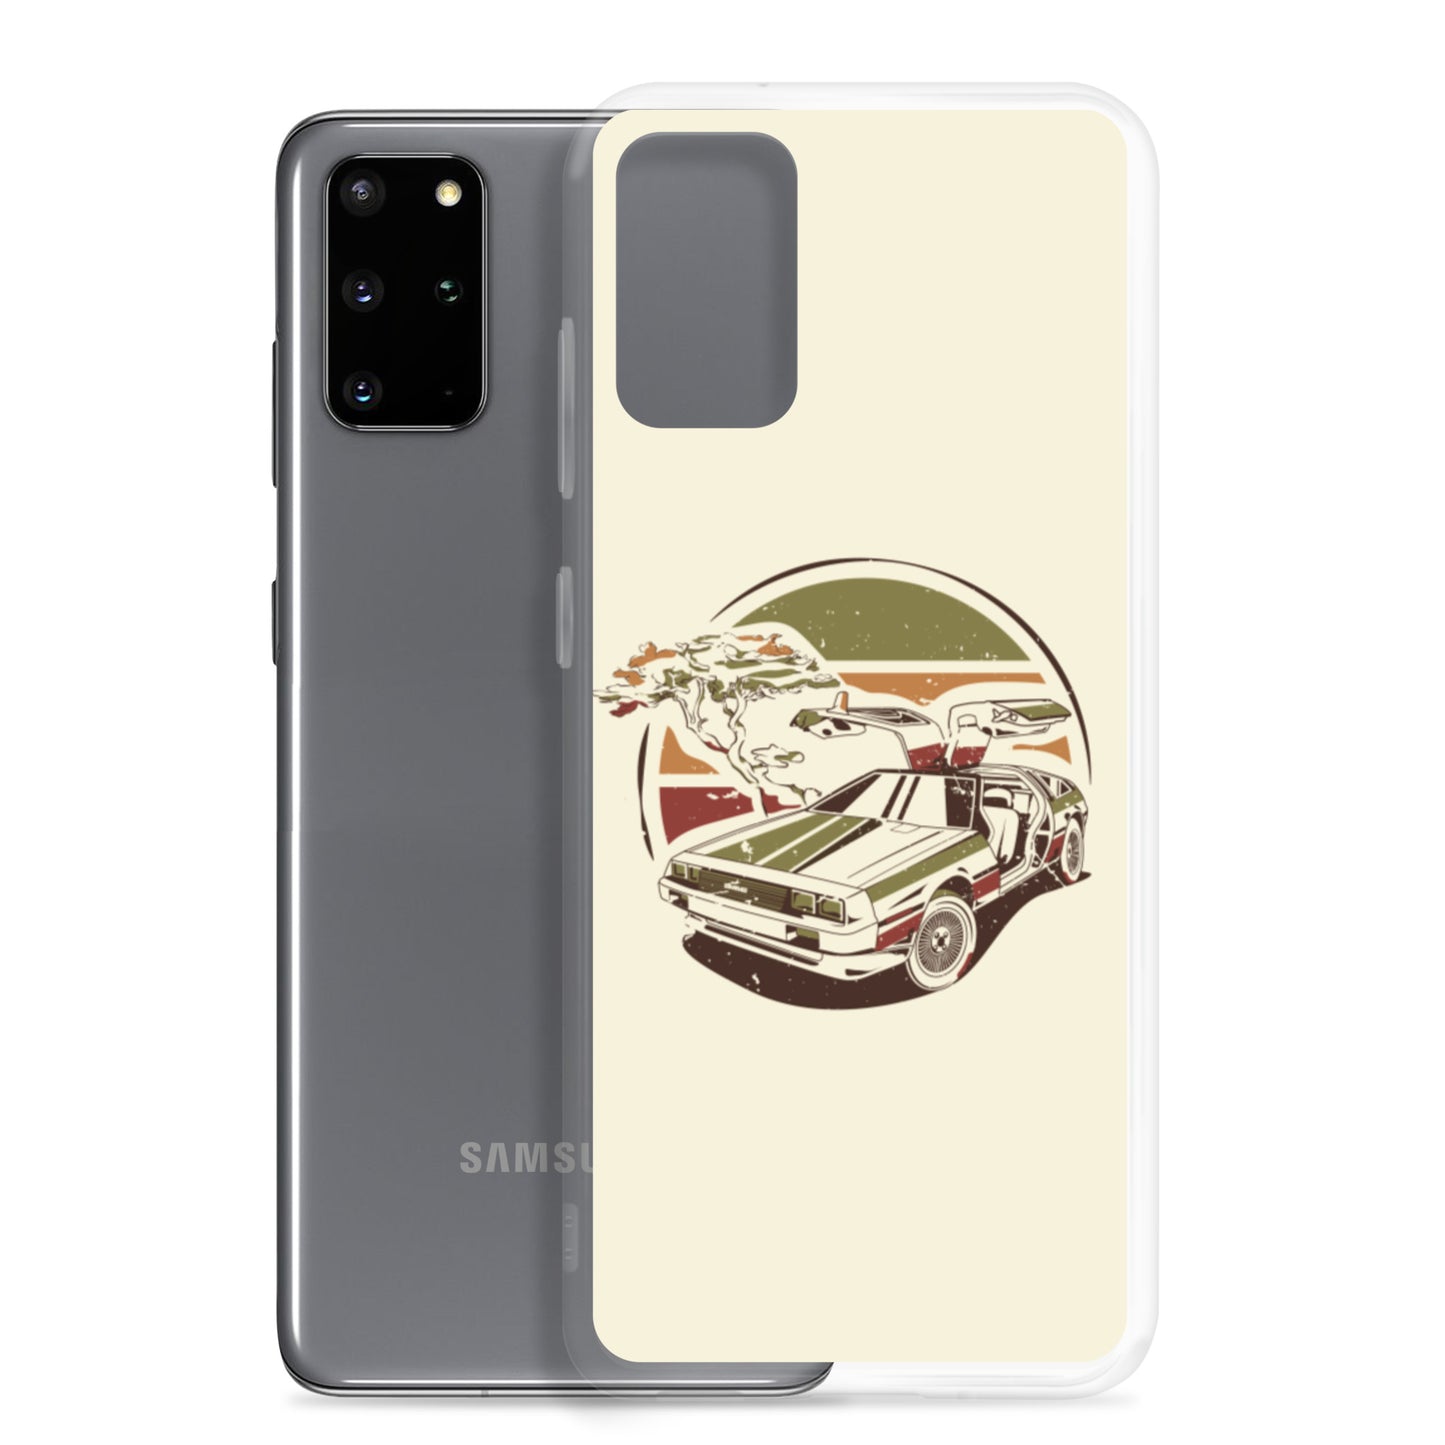 Stylized DeLorean Samsung Phone Case